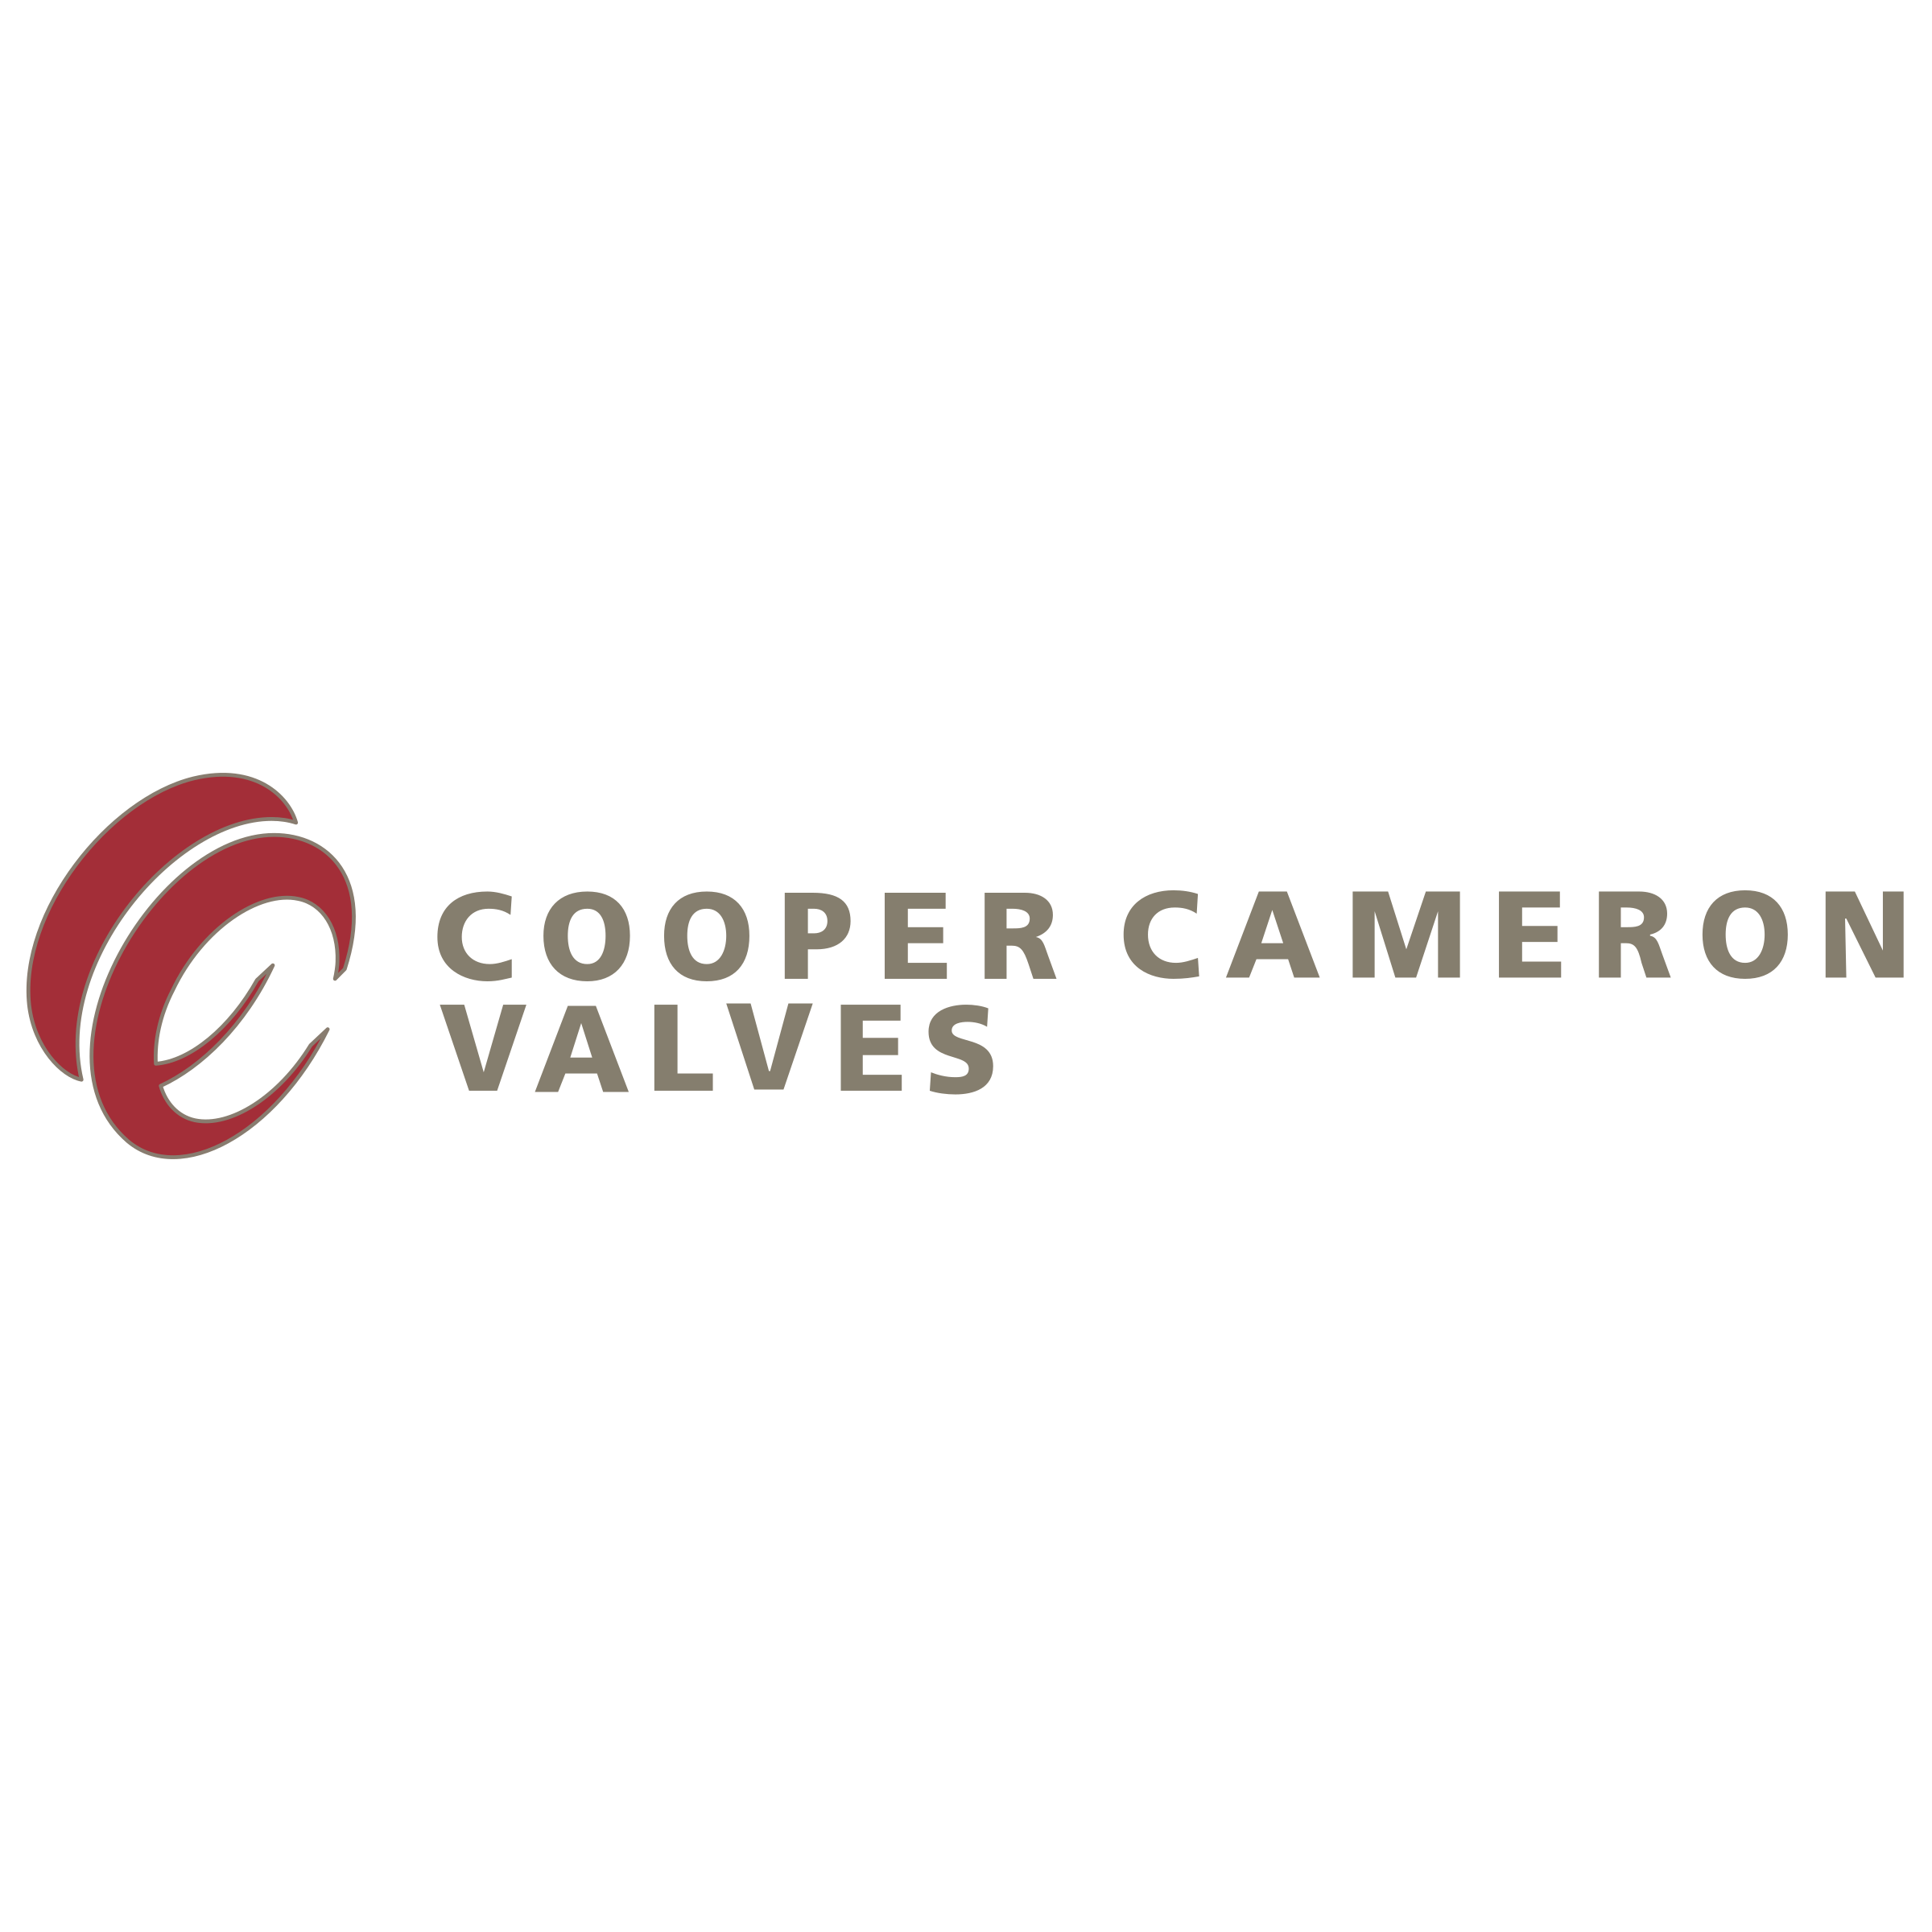 Cameron Logo - Cooper Cameron Valves Logo PNG Transparent & SVG Vector - Freebie Supply